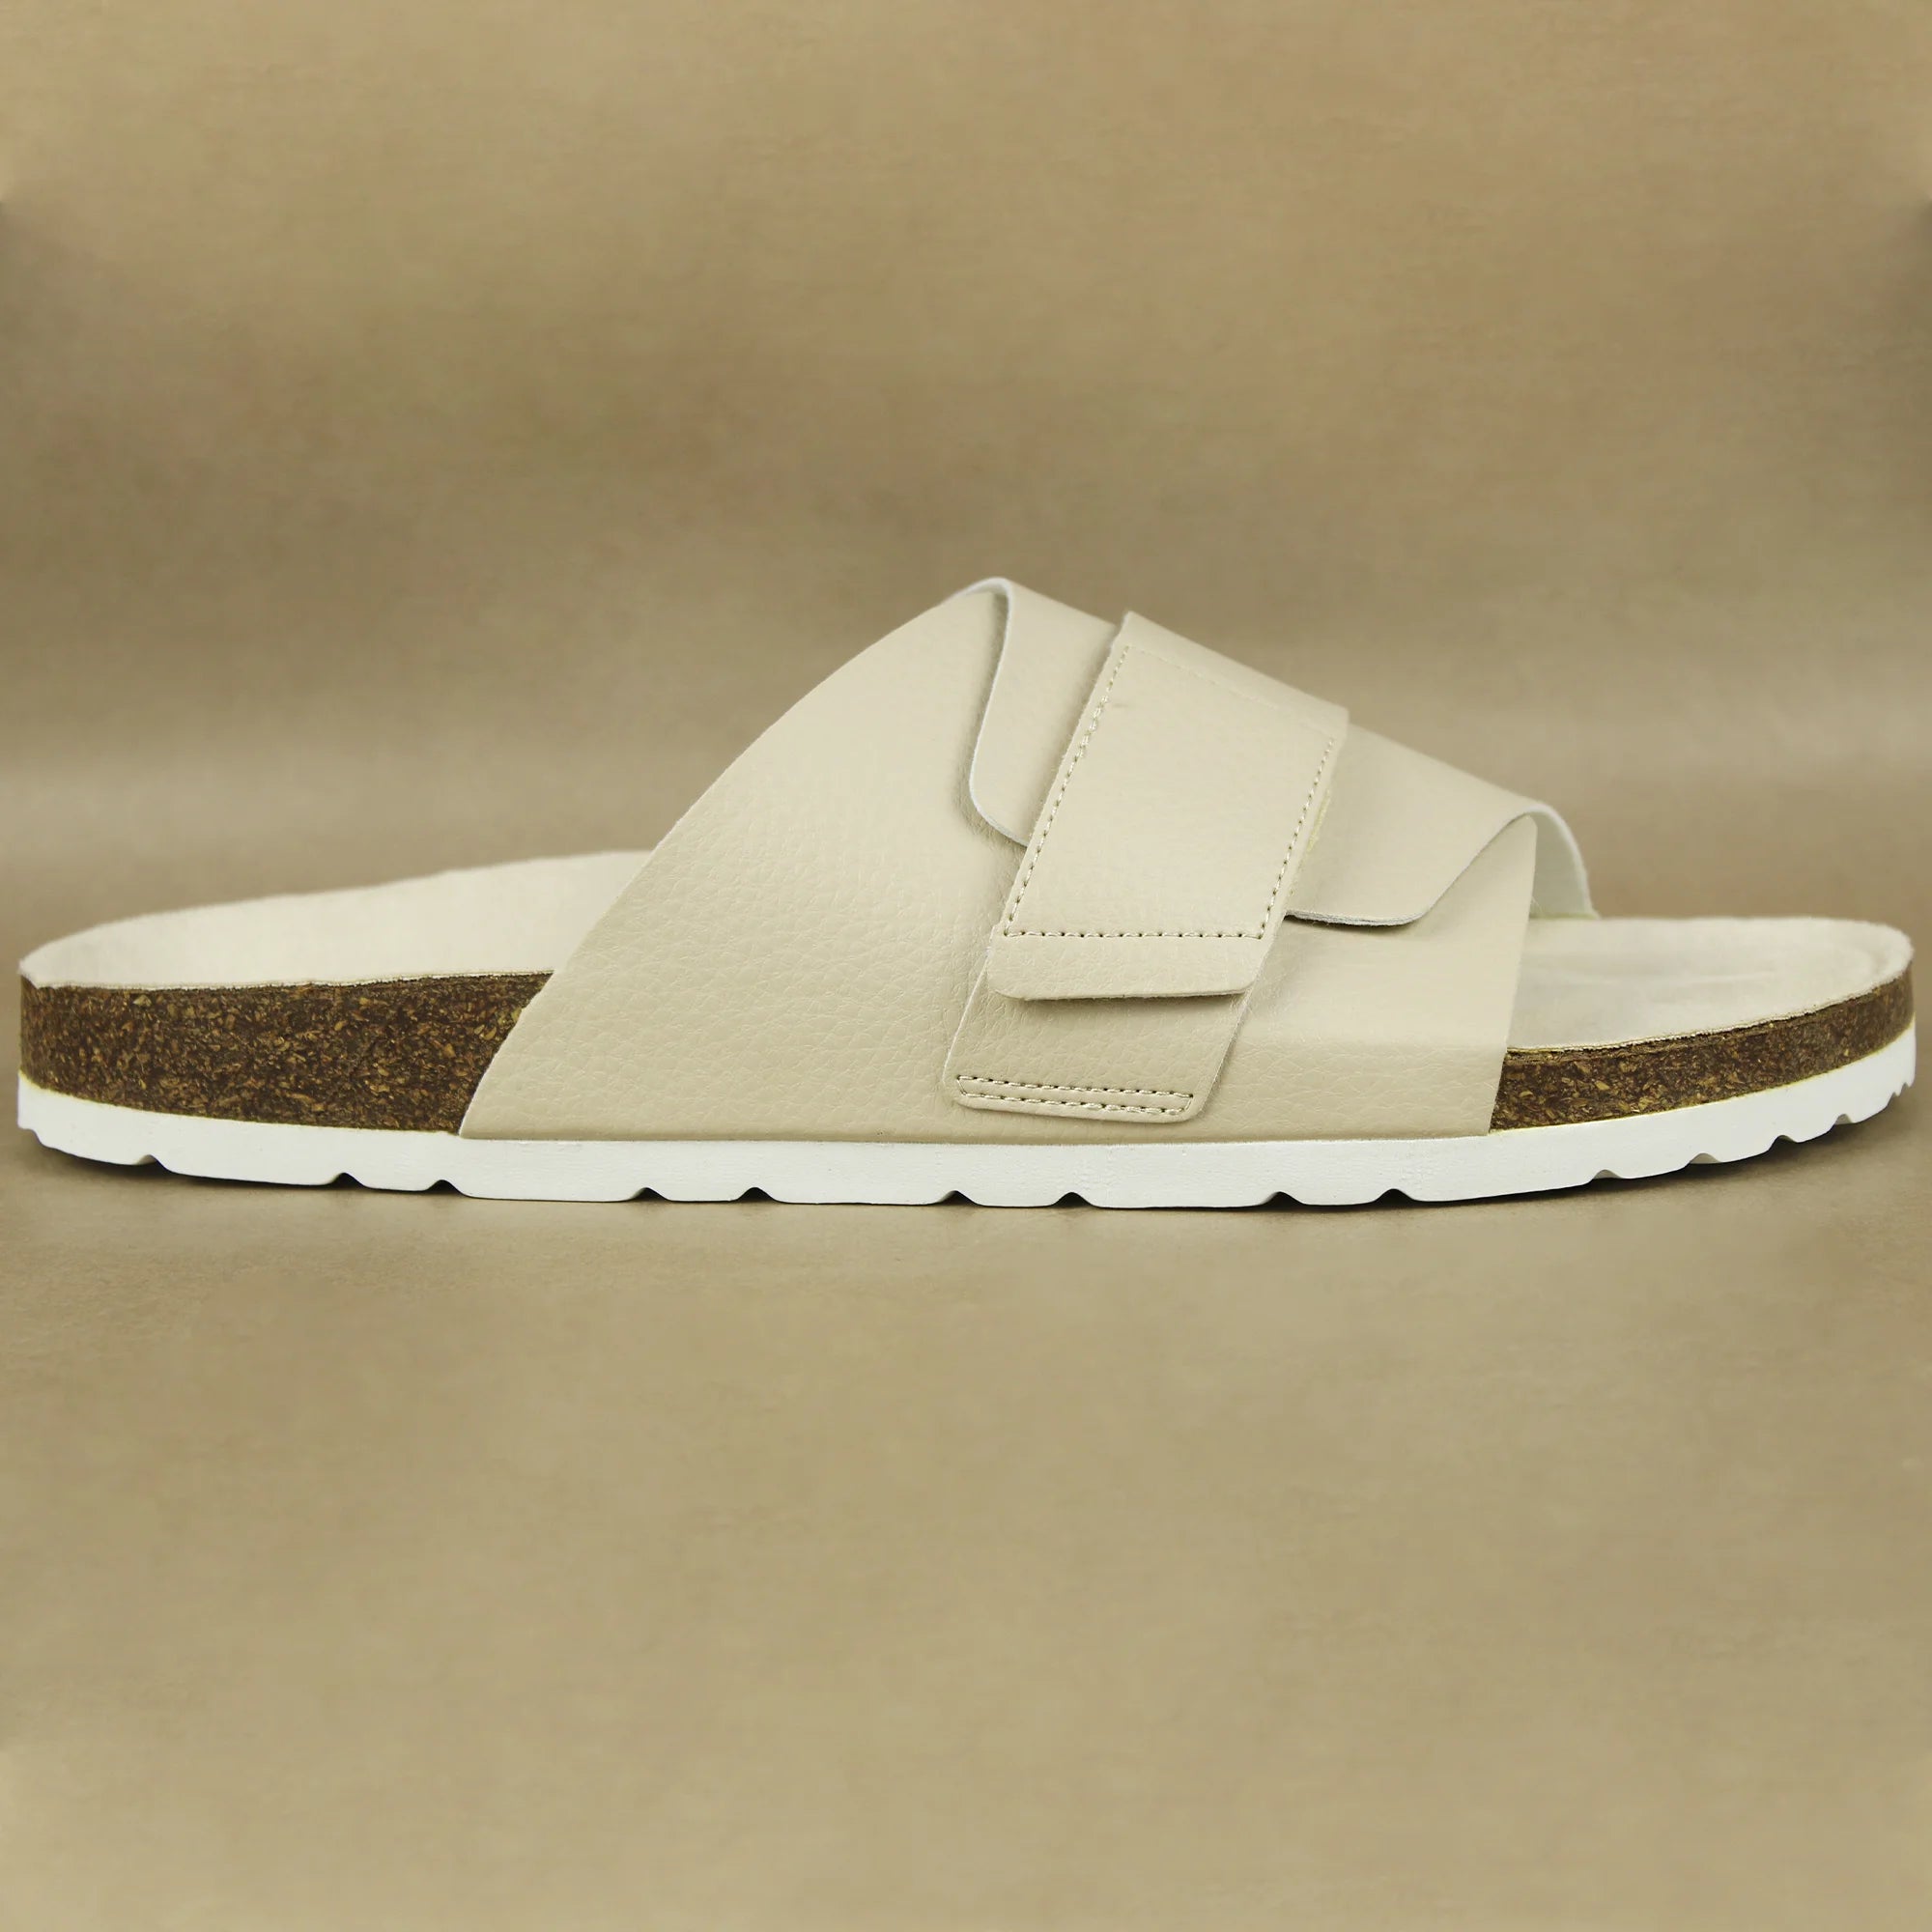 Cork sandals for elderly men in beige with adjustable and comfortable straps